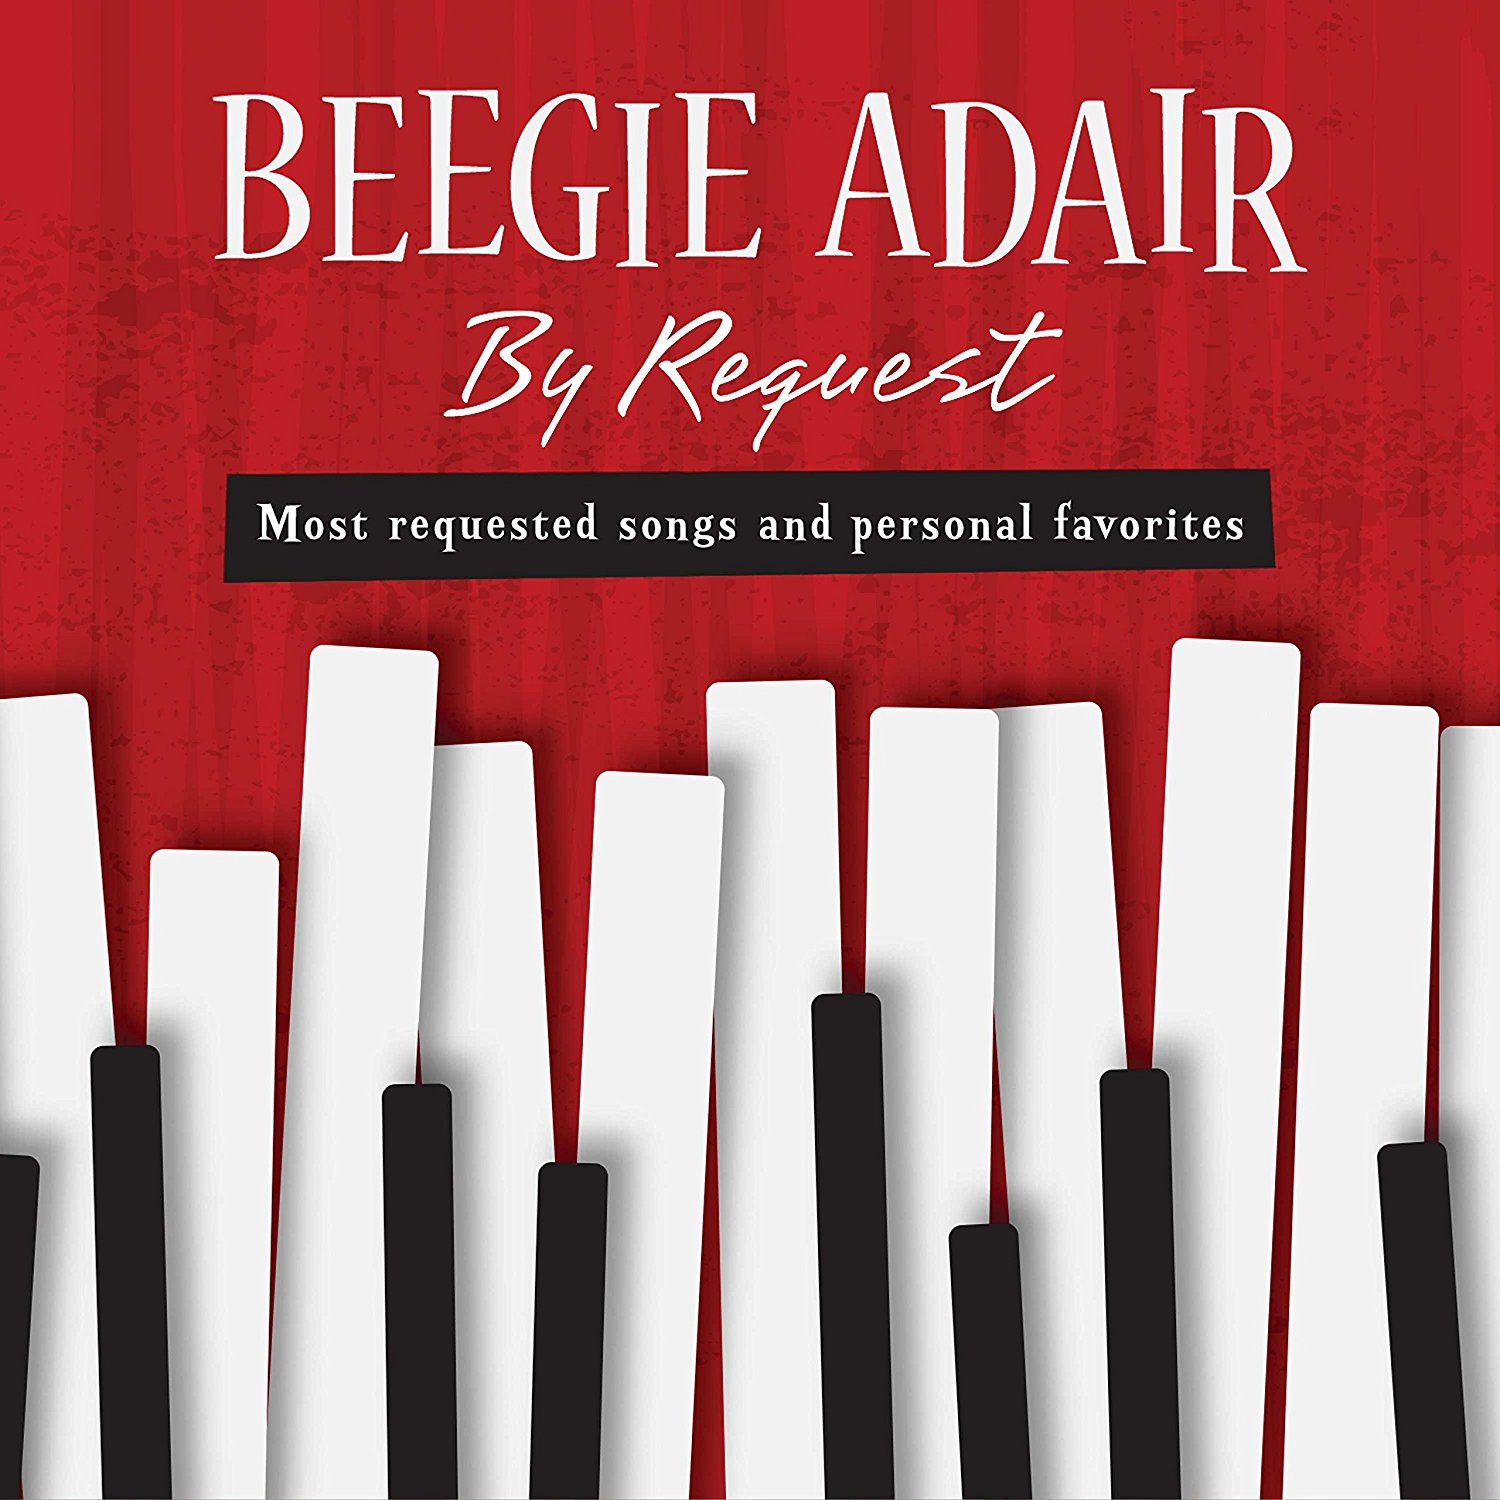 BEEGIE ADAIR - By Request cover 